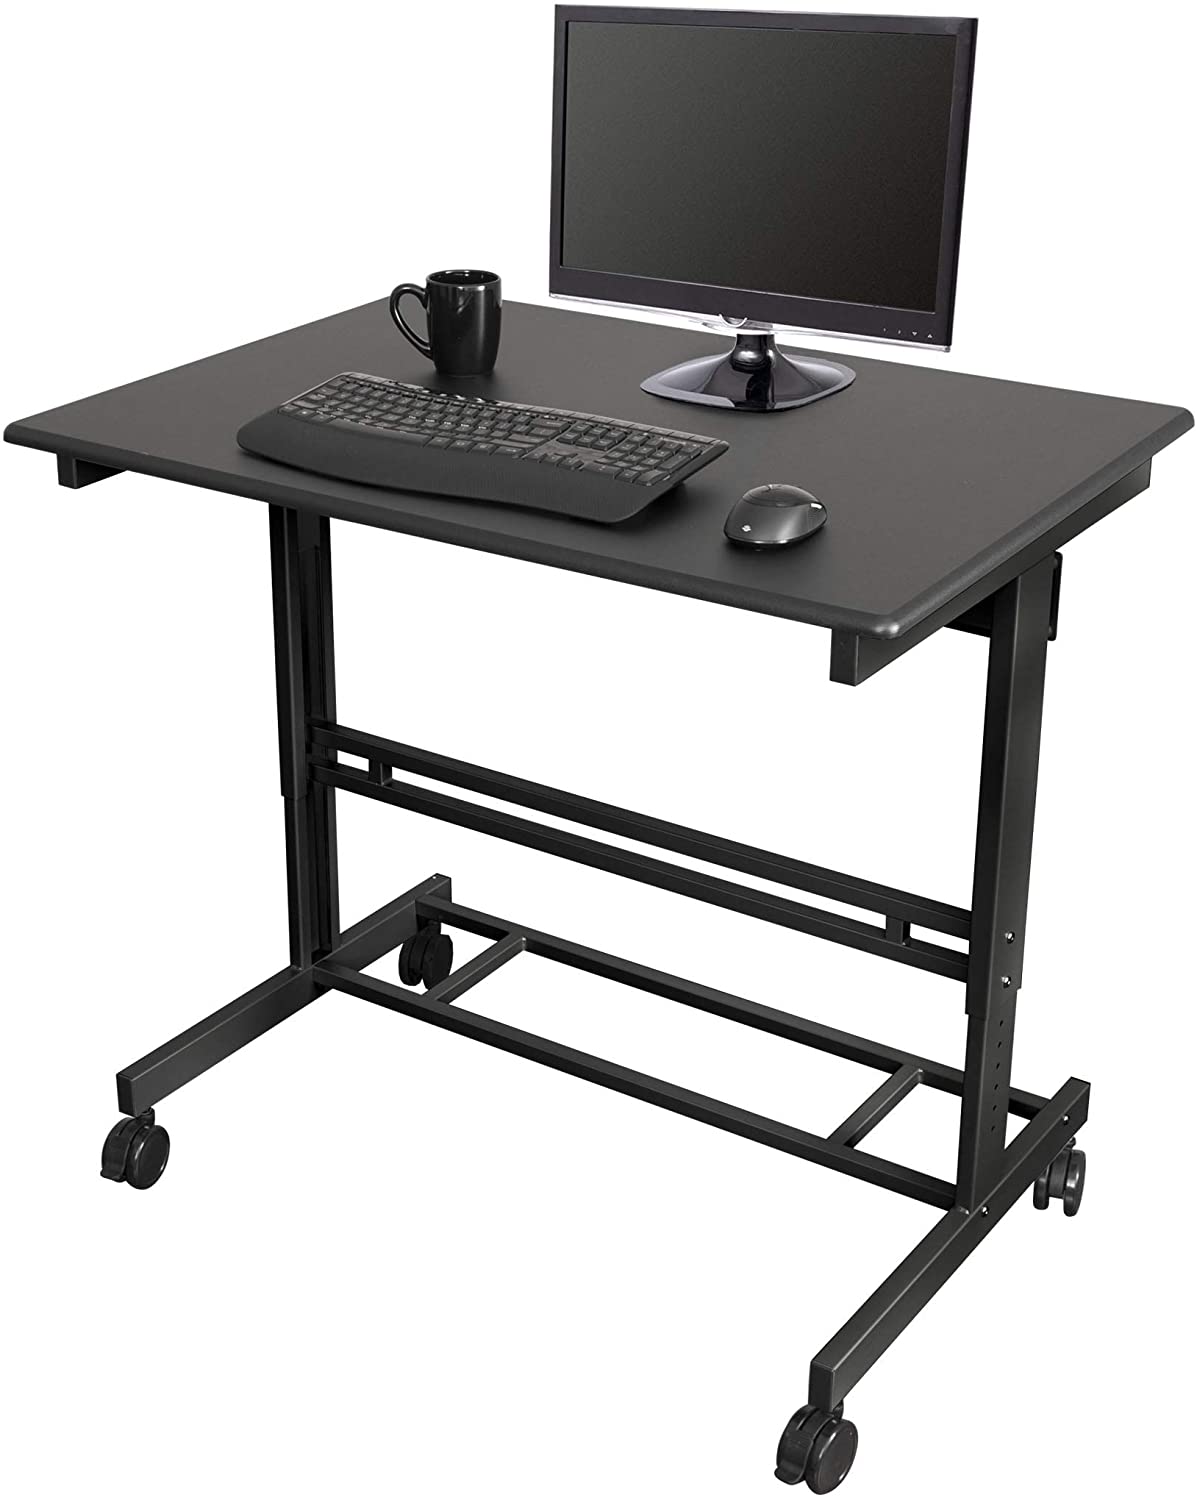 Black standing desk